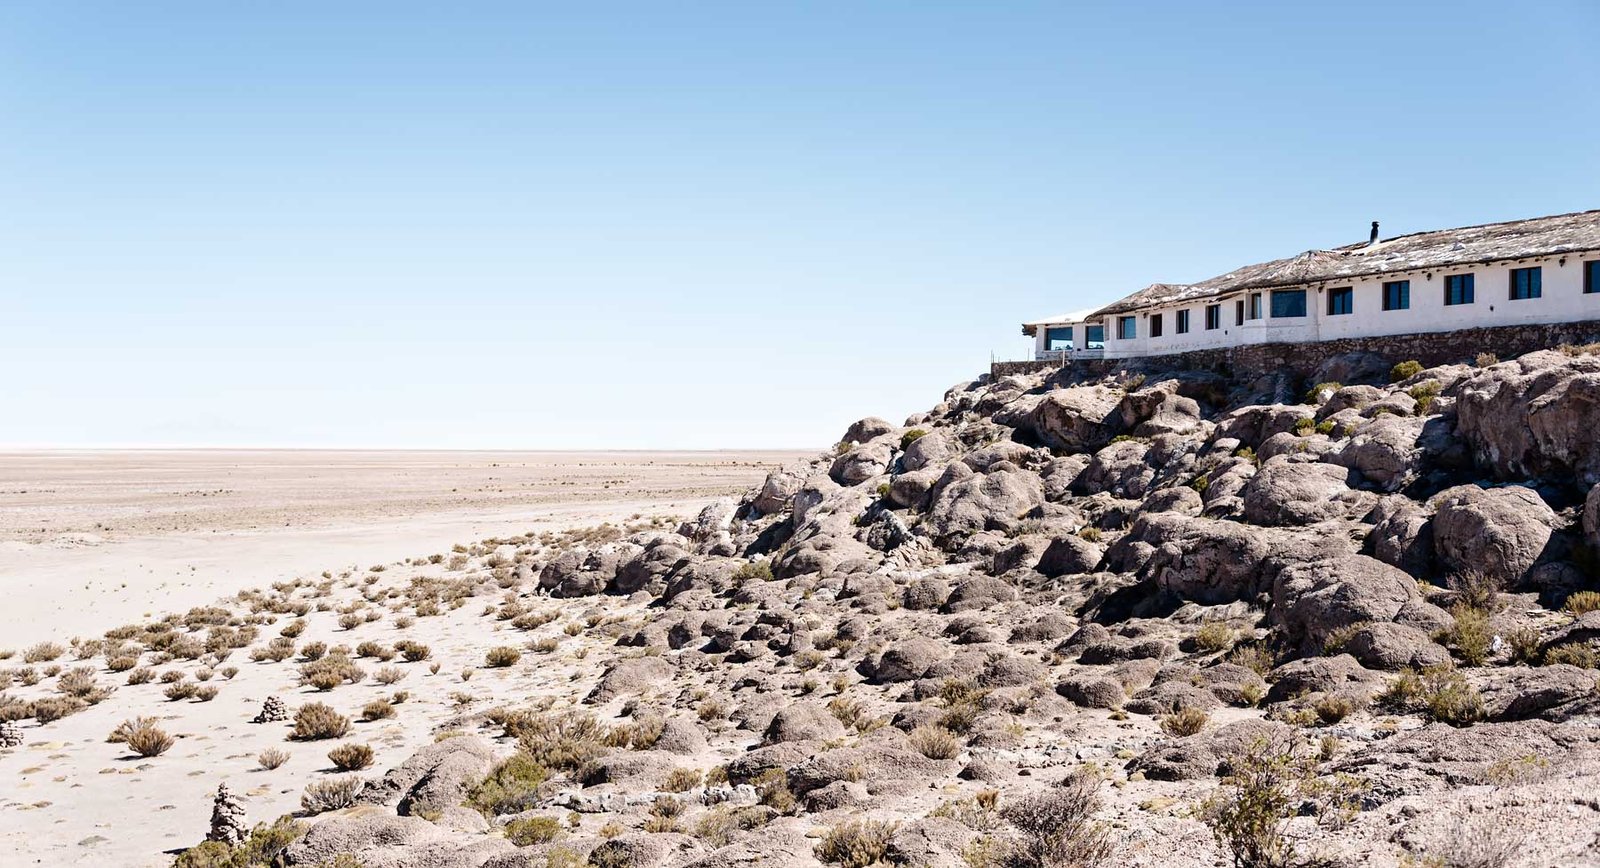 Salt hotel Luna Salada - Salar de Uyuni: 5 Unforgettable Experiences on Bolivia's Salt Flats and Colored Lagoons